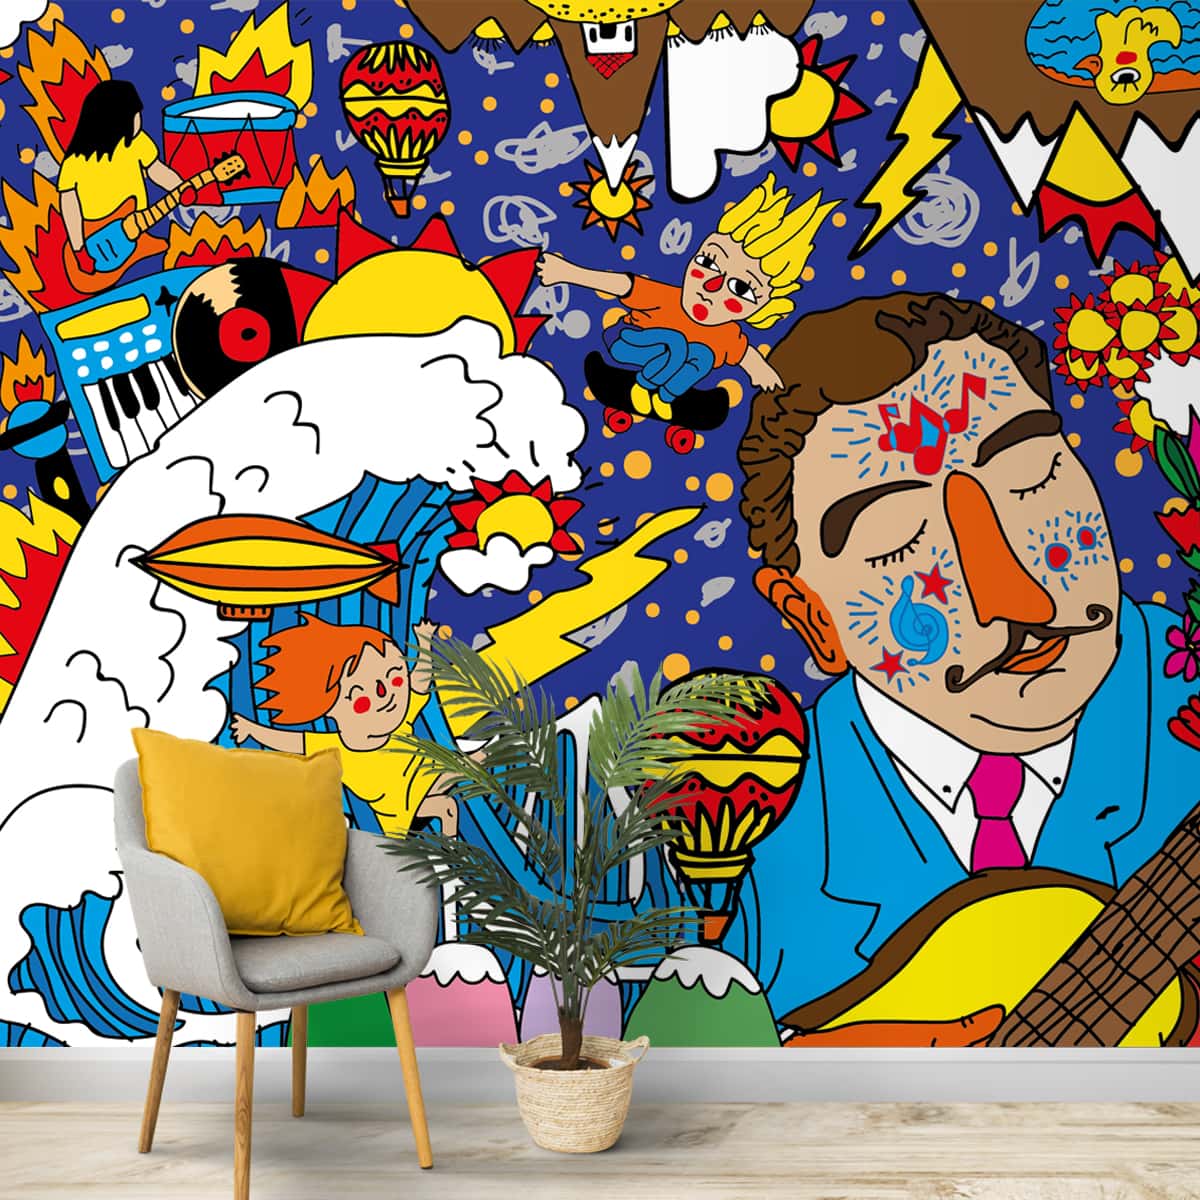 Colourful Graffiti Wallpaper for Modern Rooms, Customised